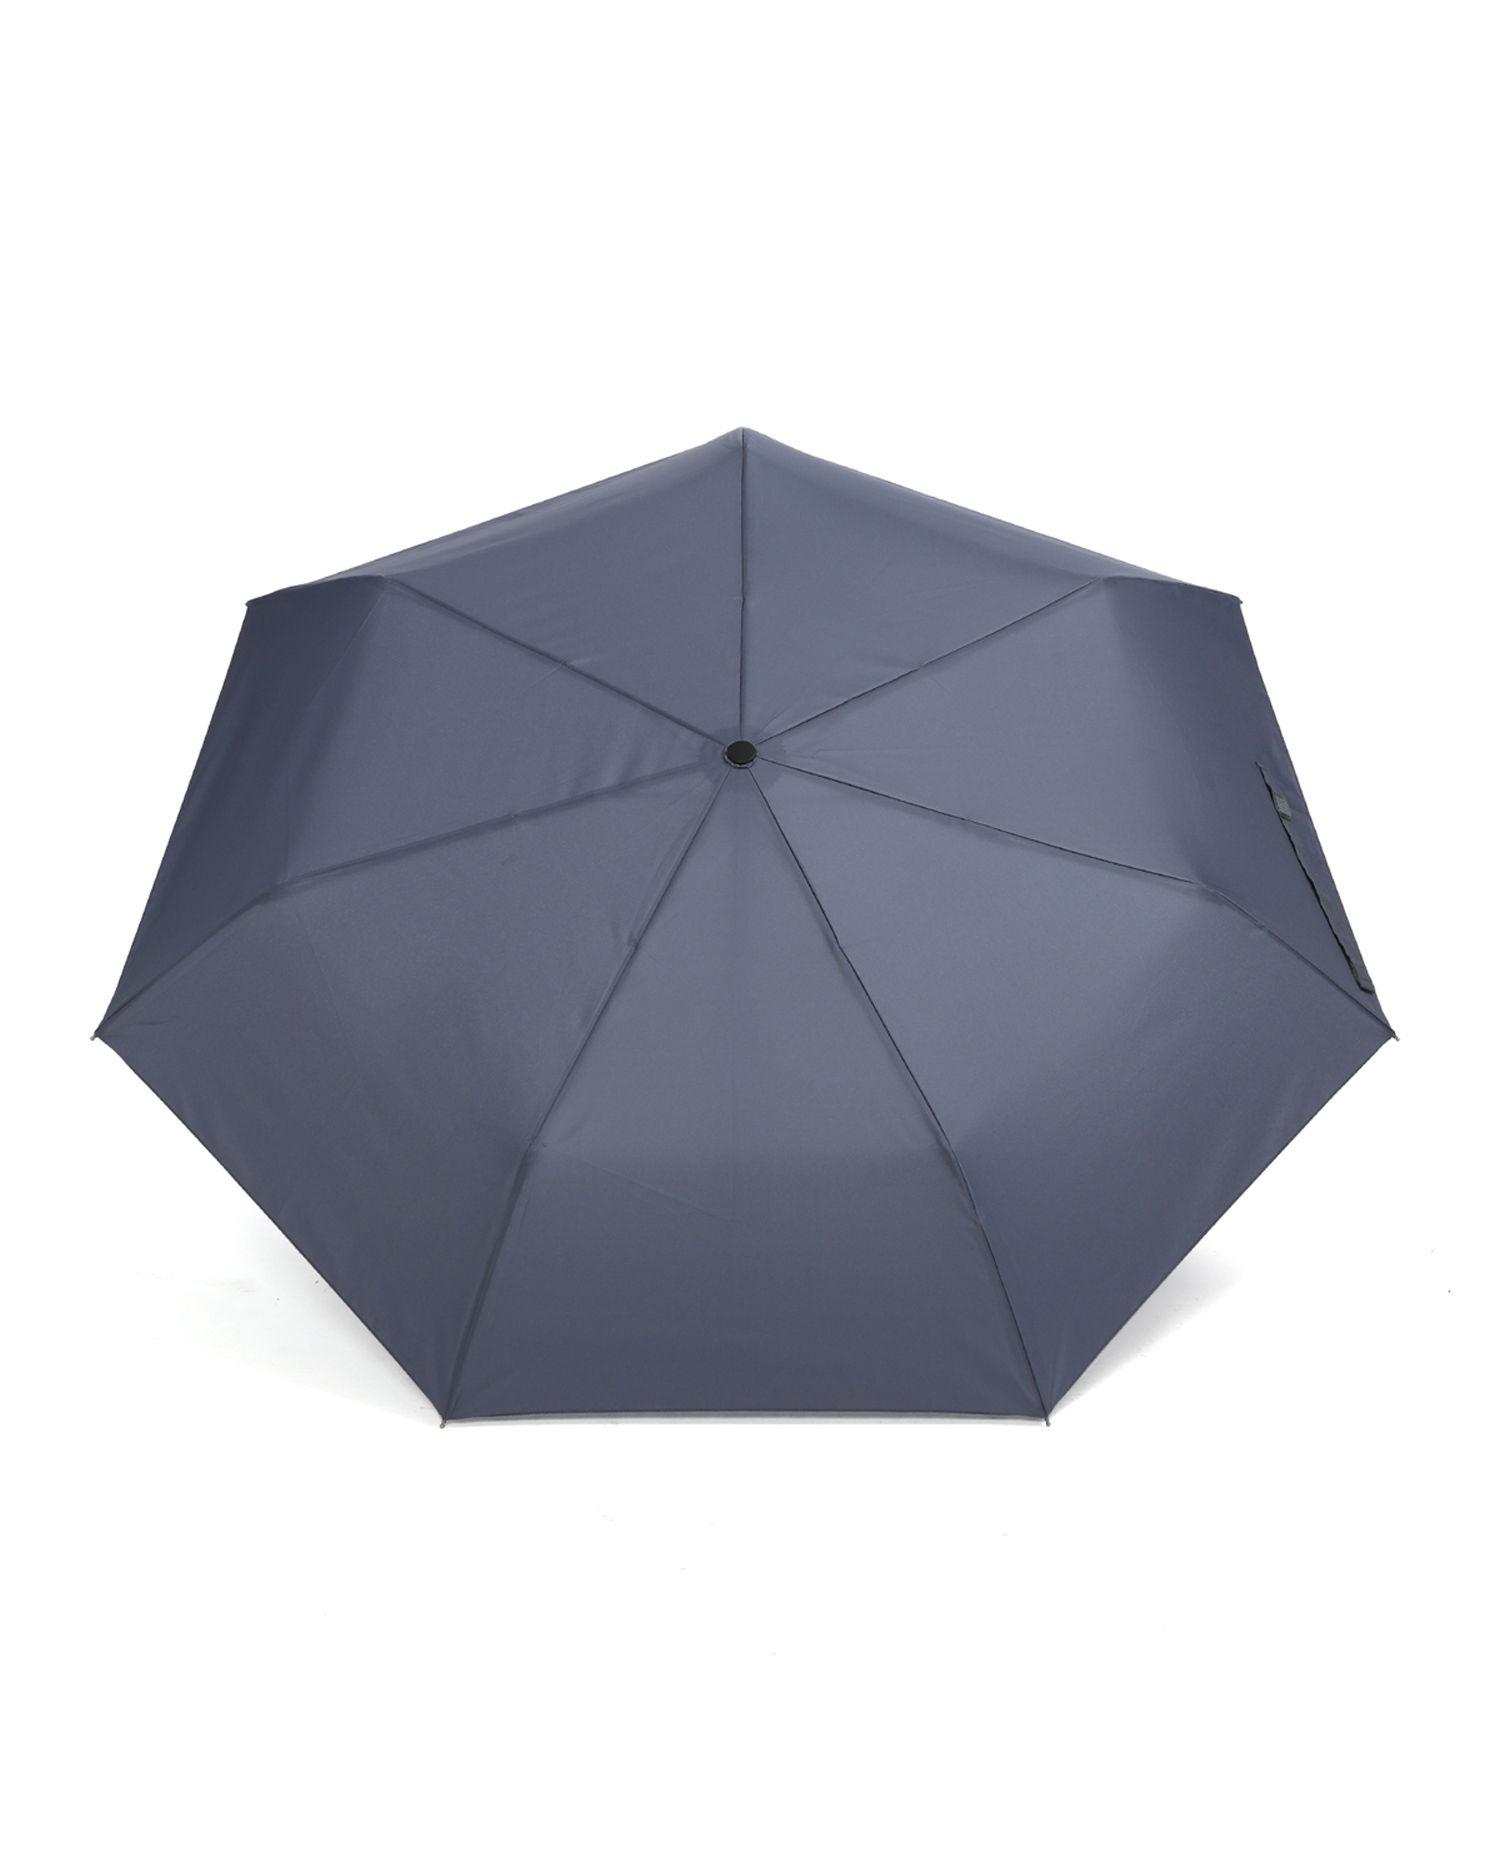 Classic umbrella by BPR